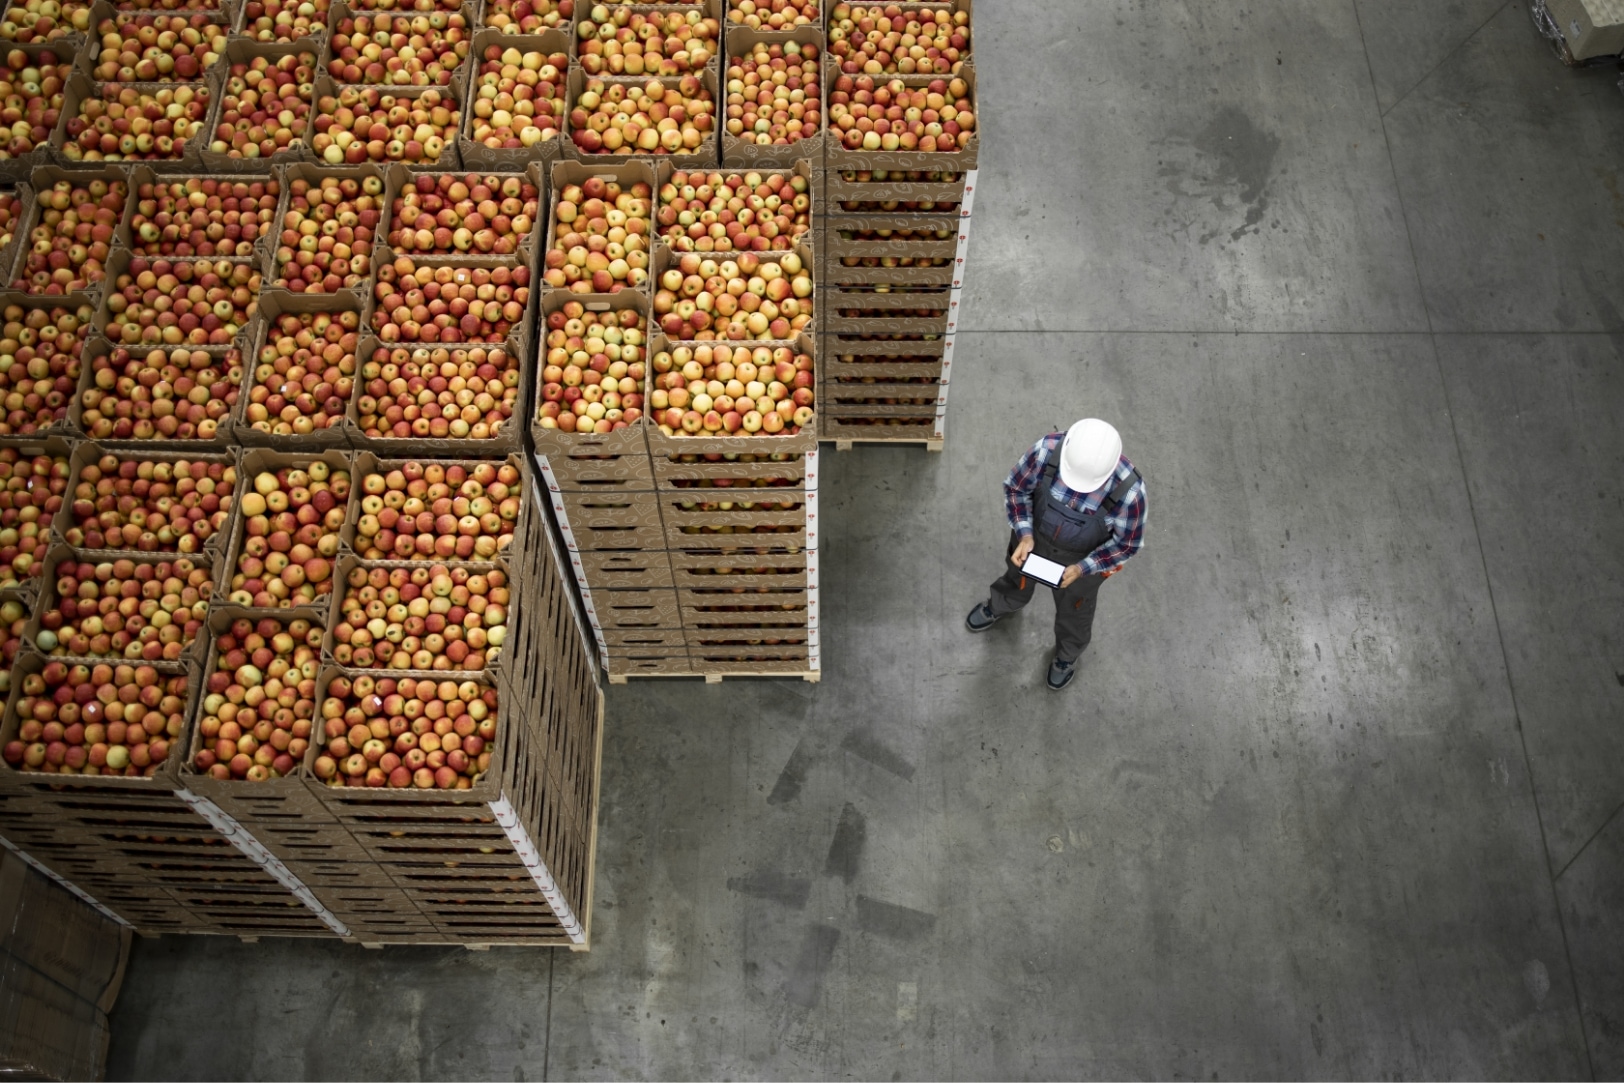 Worker checking phone beside packs of apples